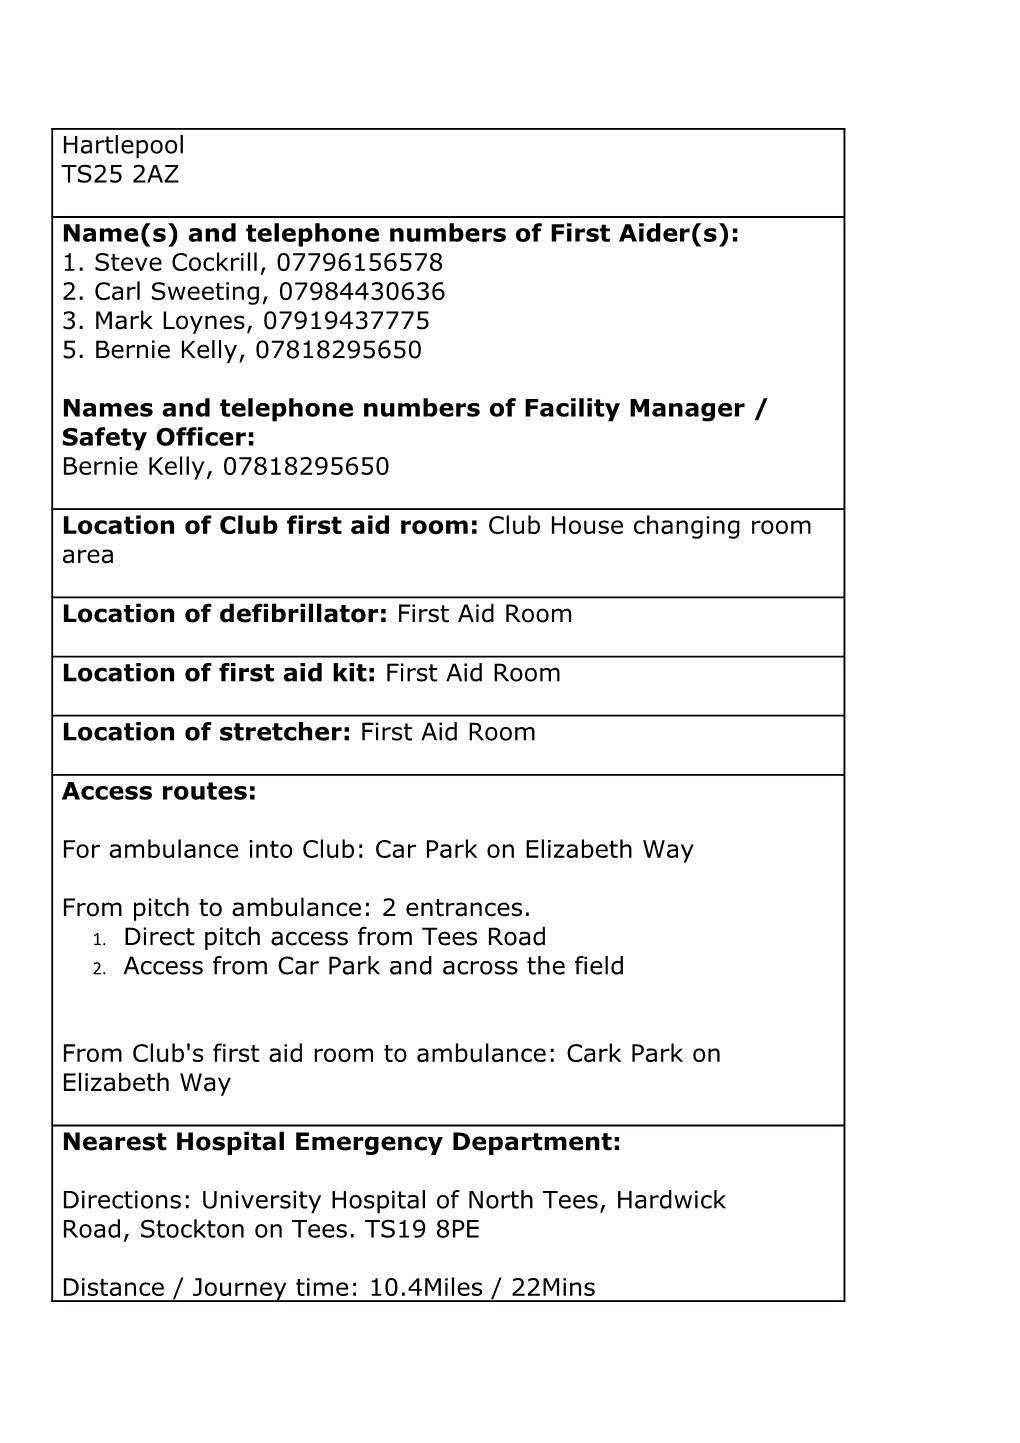 FA Medical Emergency Action Plan Form